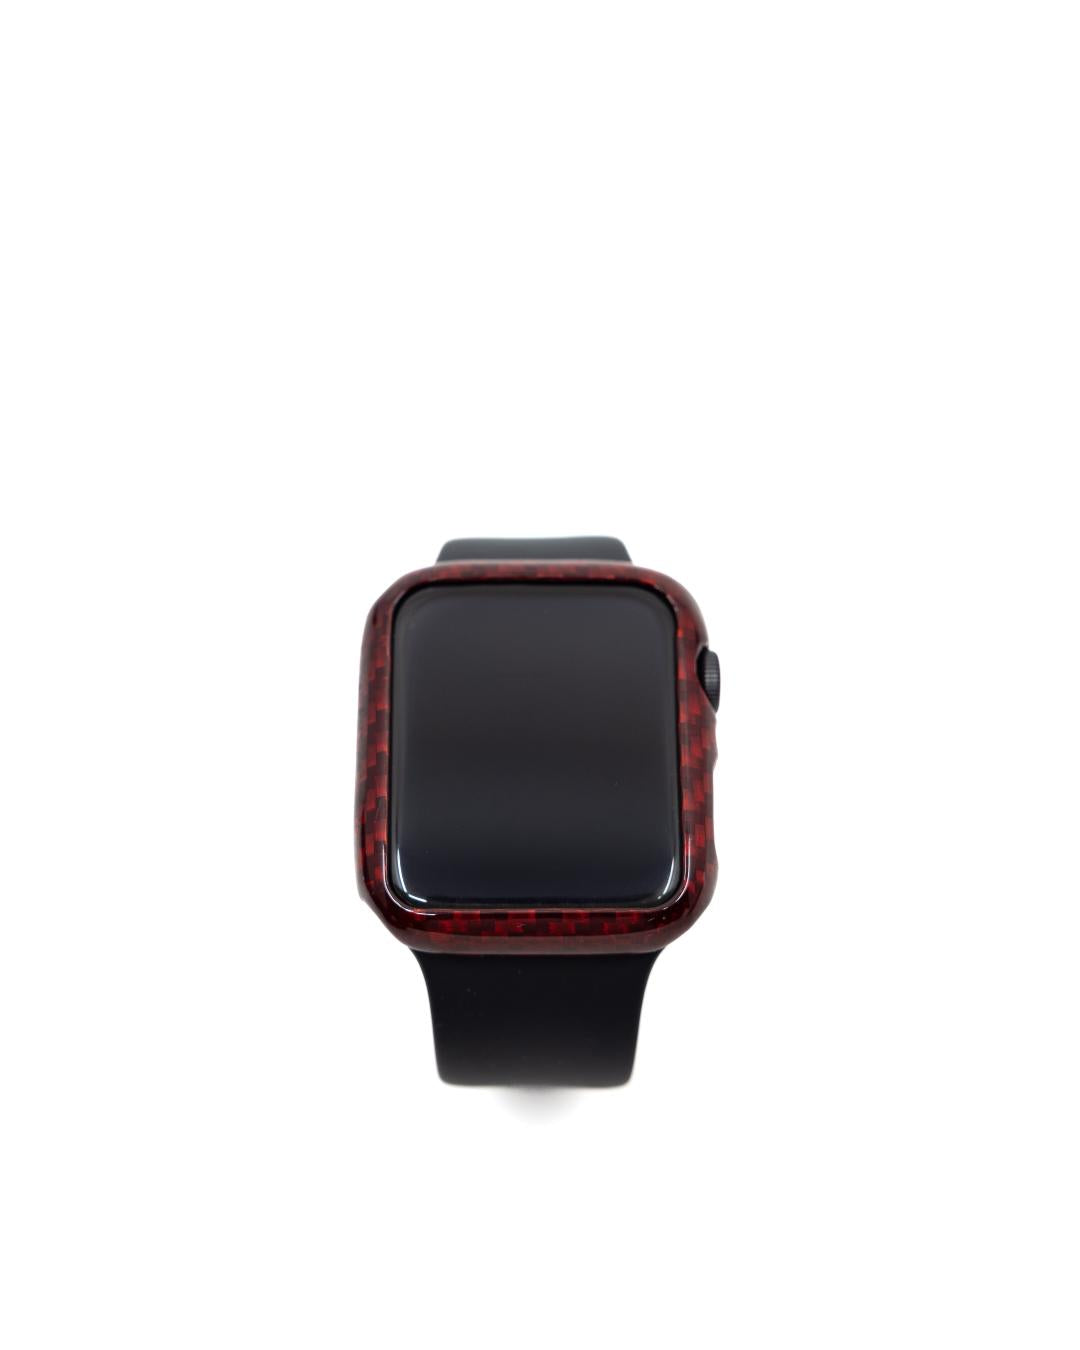 Apple Watch Carbon Fiber Cover